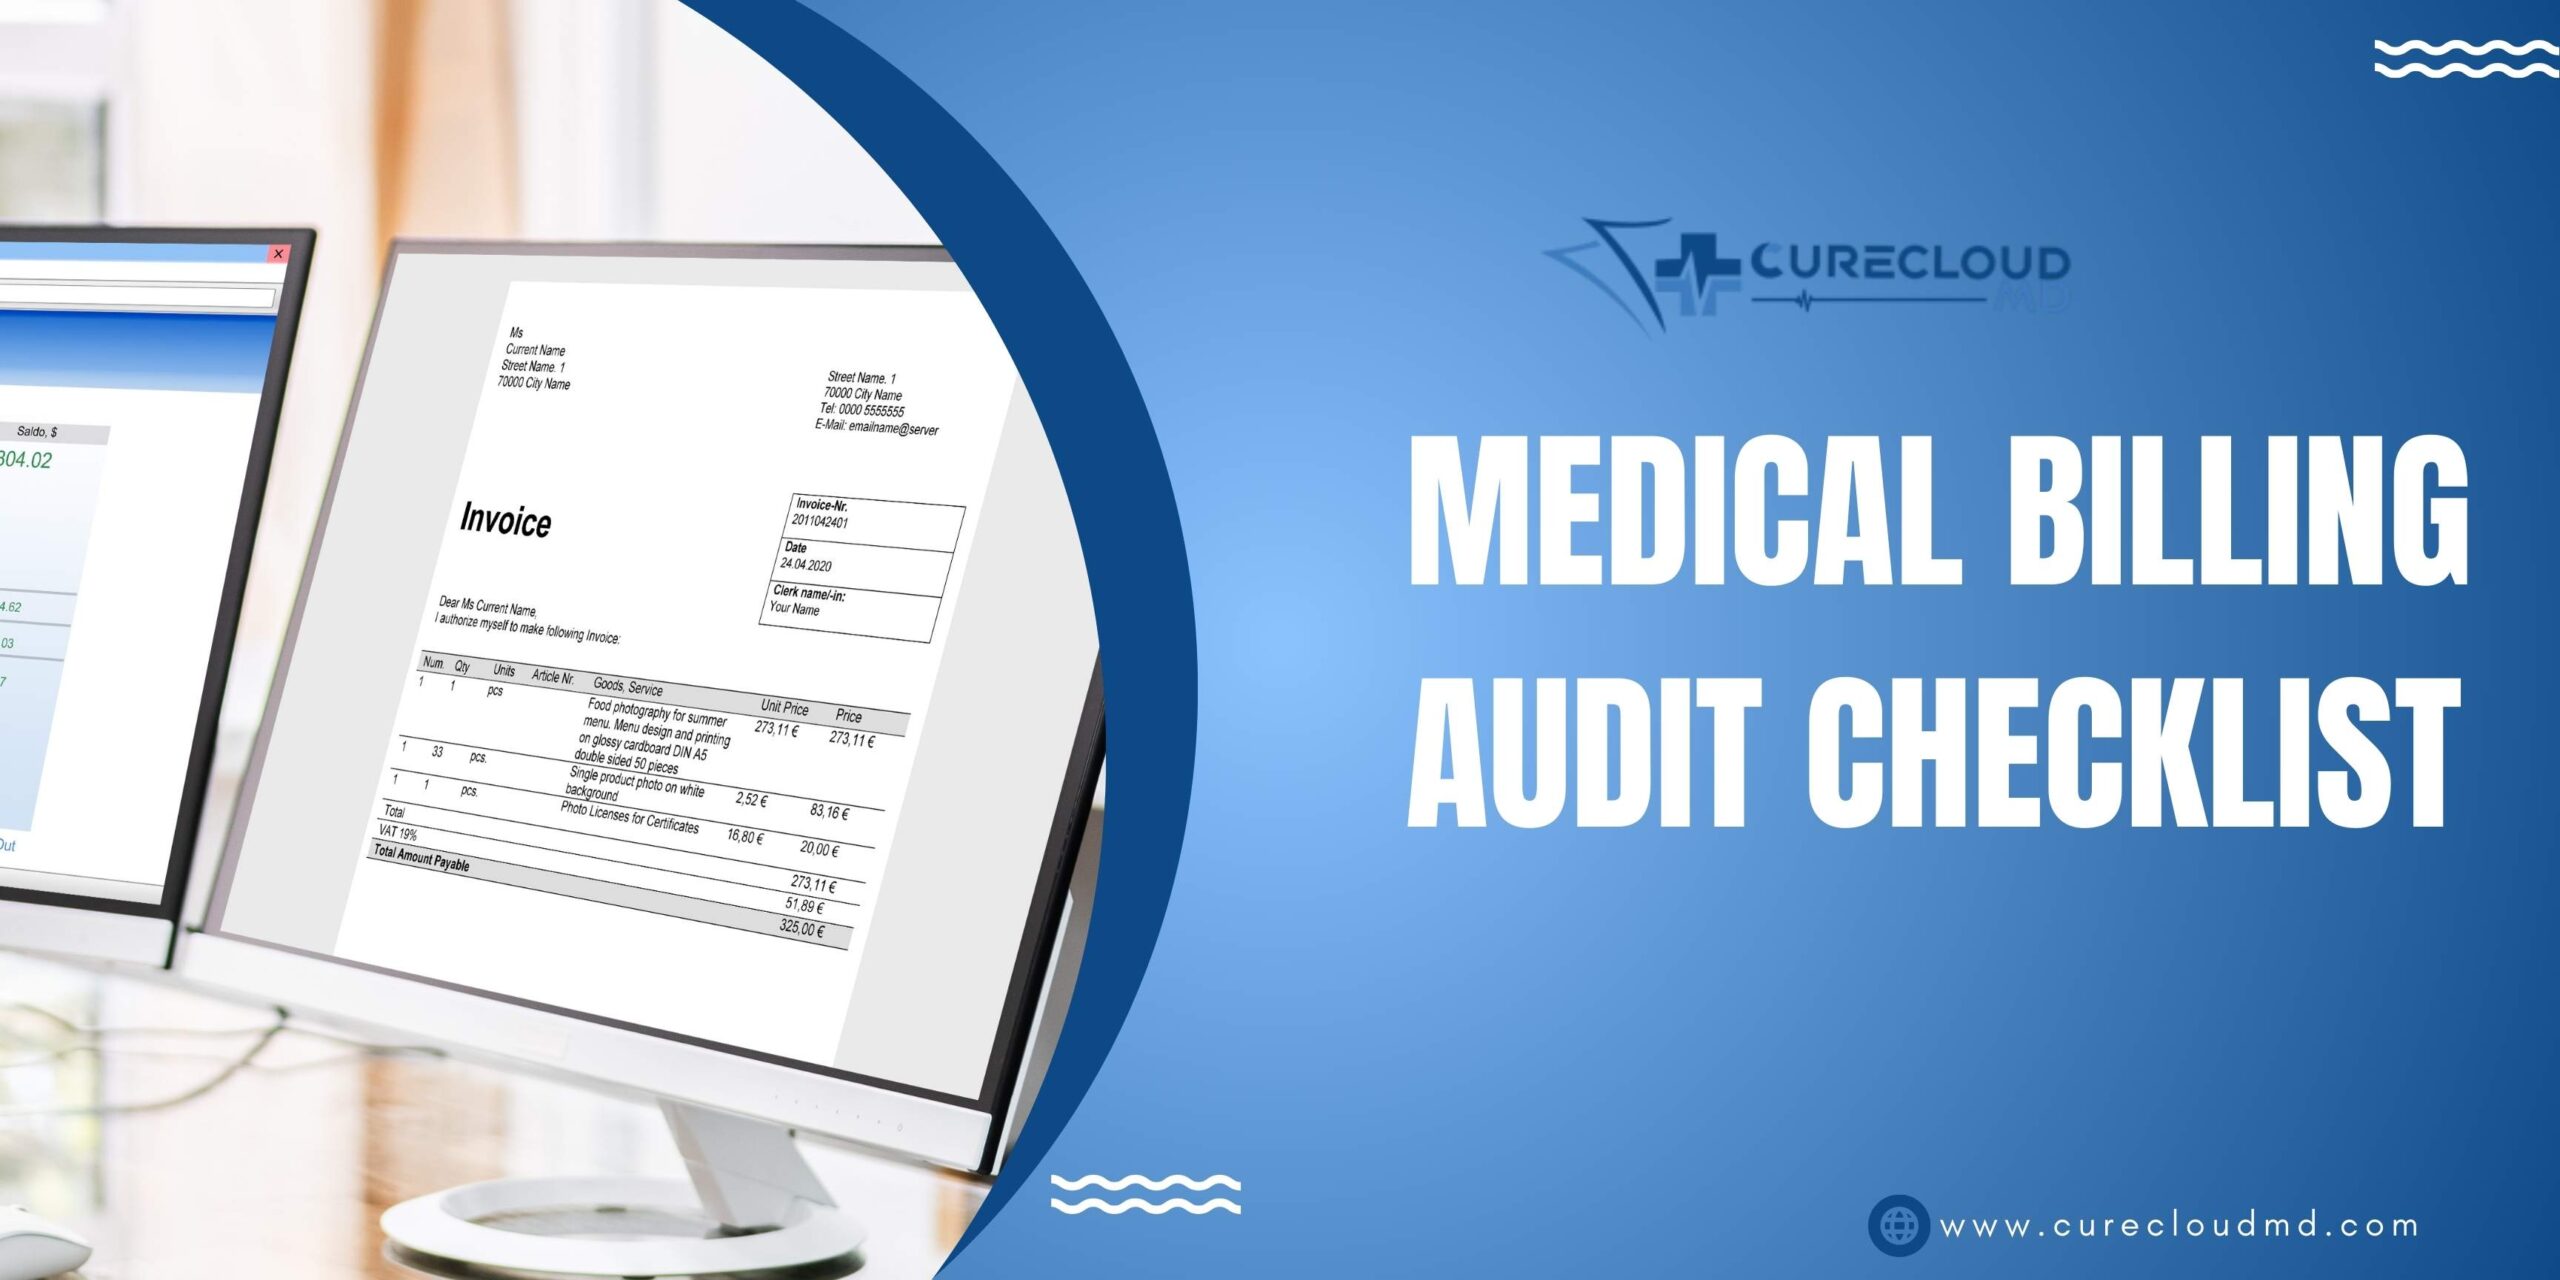 Medical Billing Audit Checklist: Top 5 Points To Consider